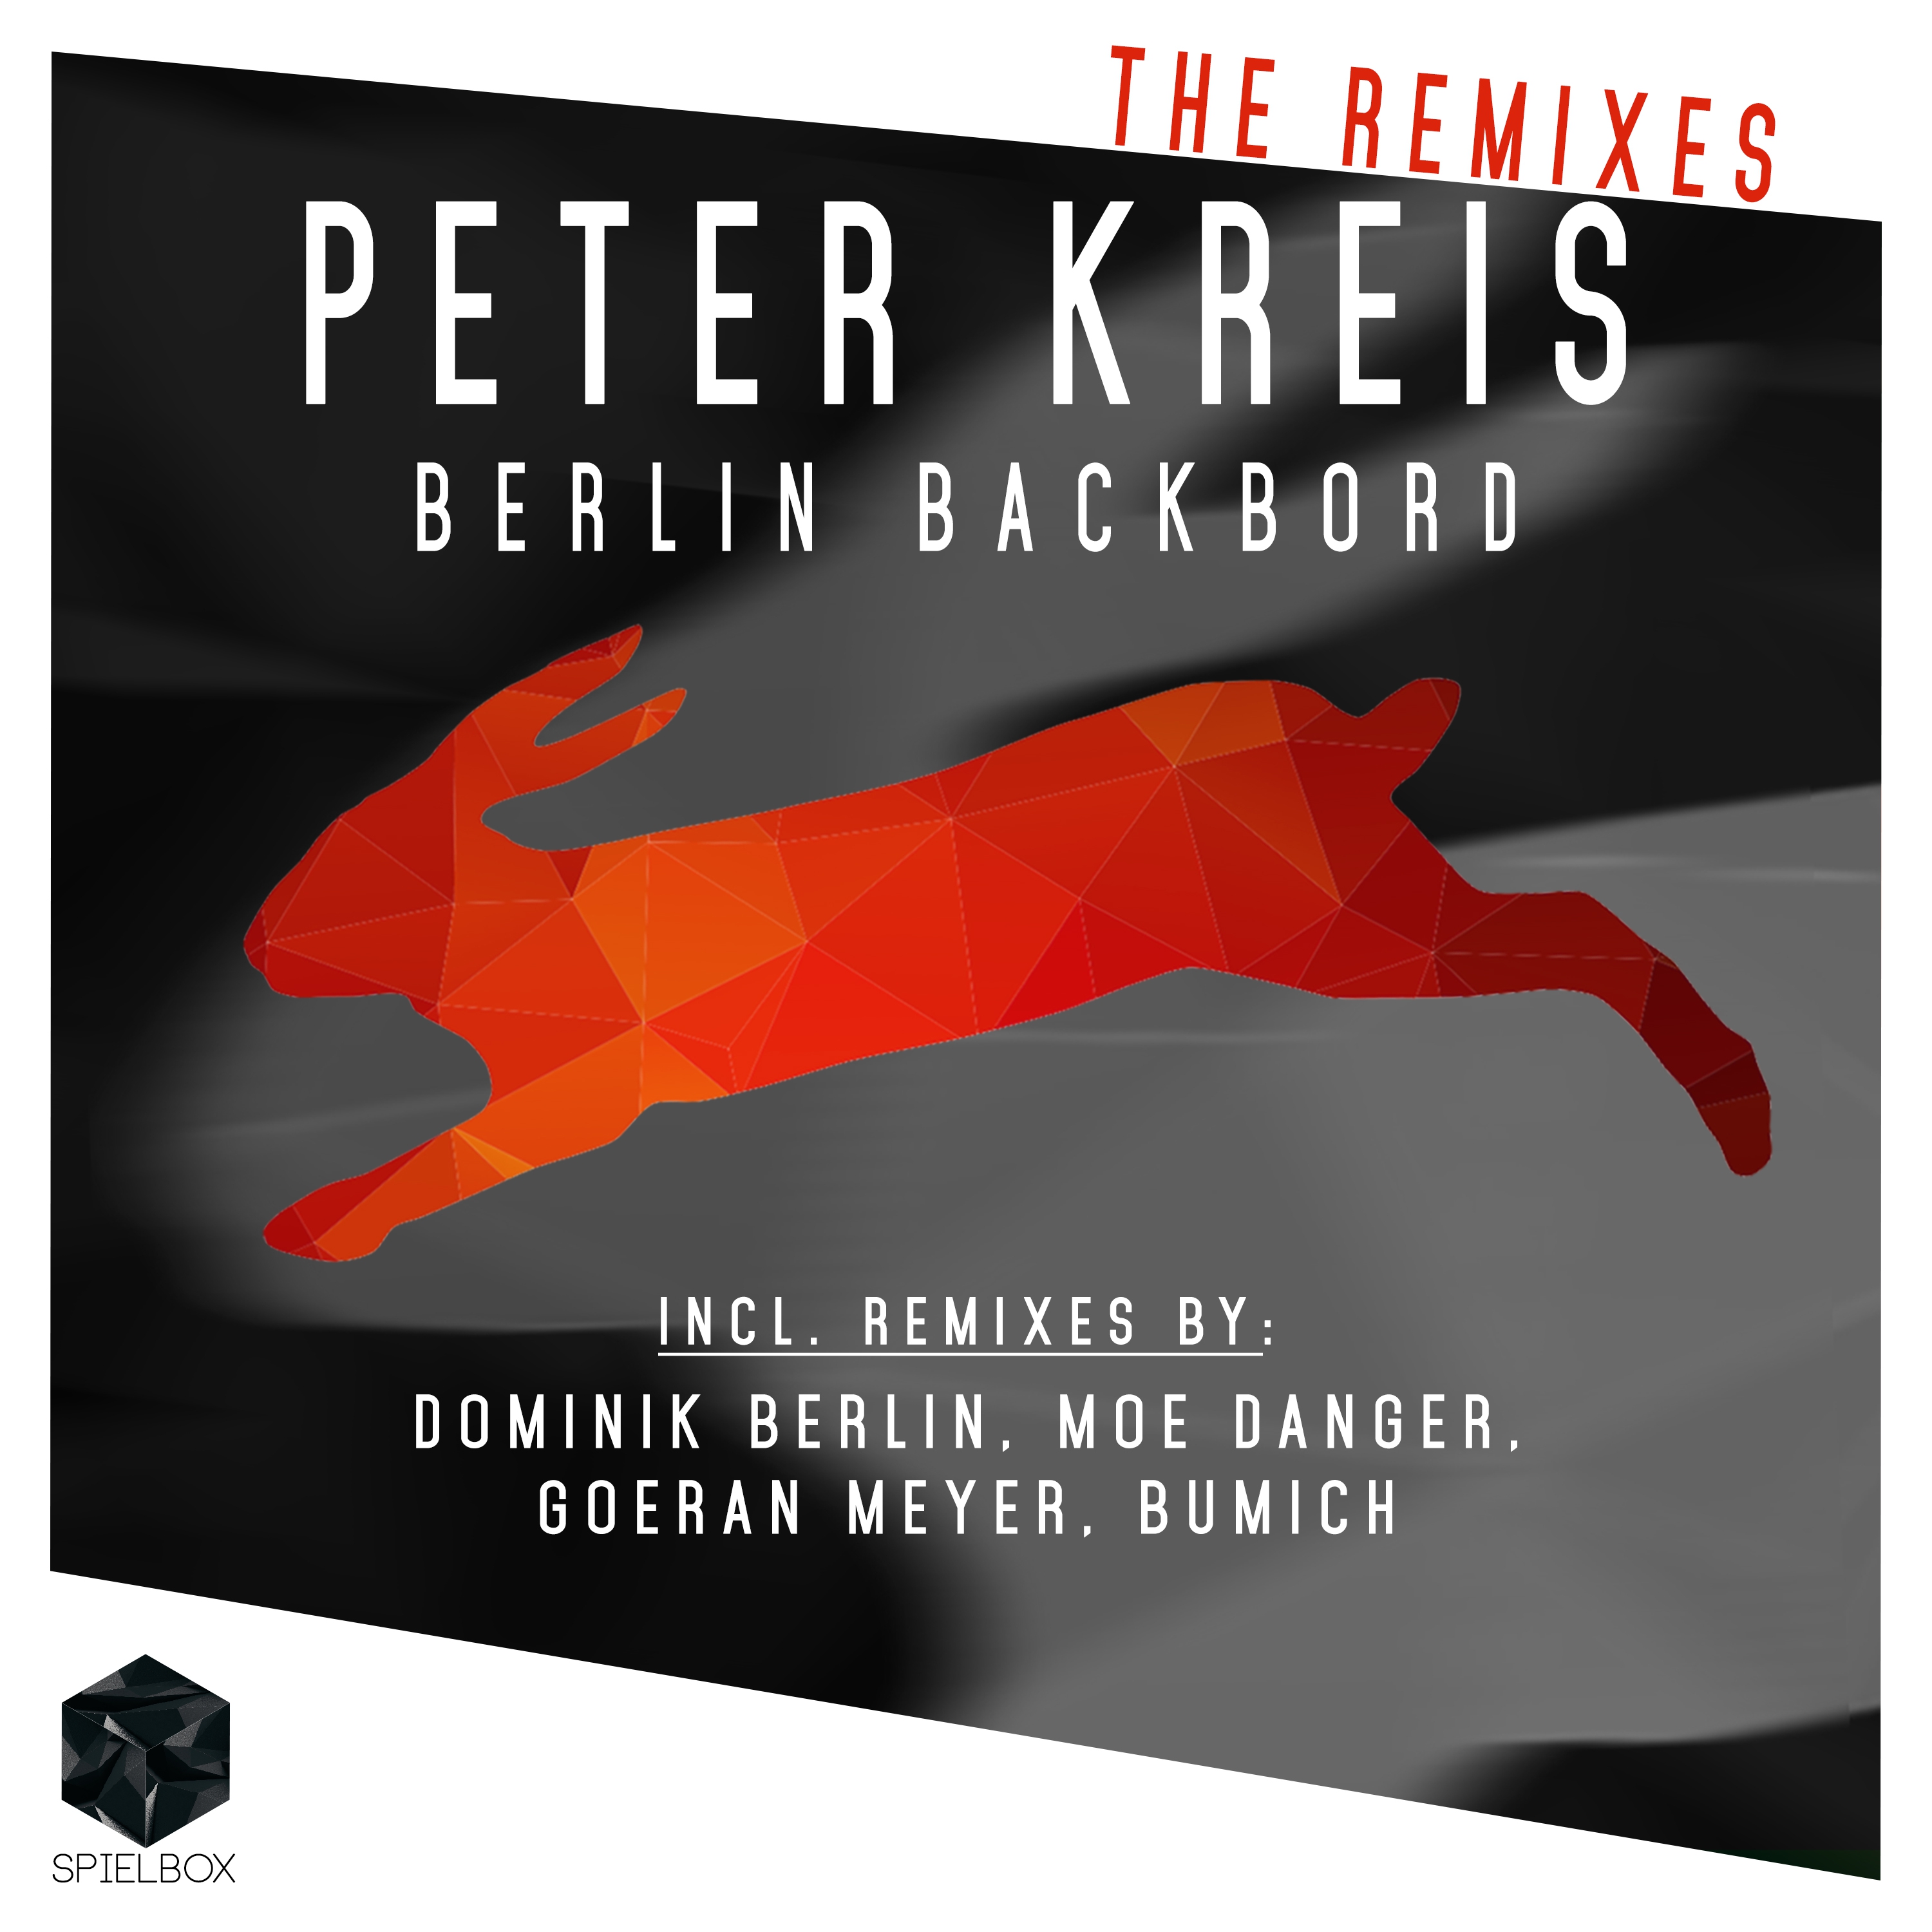 Berlin Backbord (Dominik Berlin Remix)